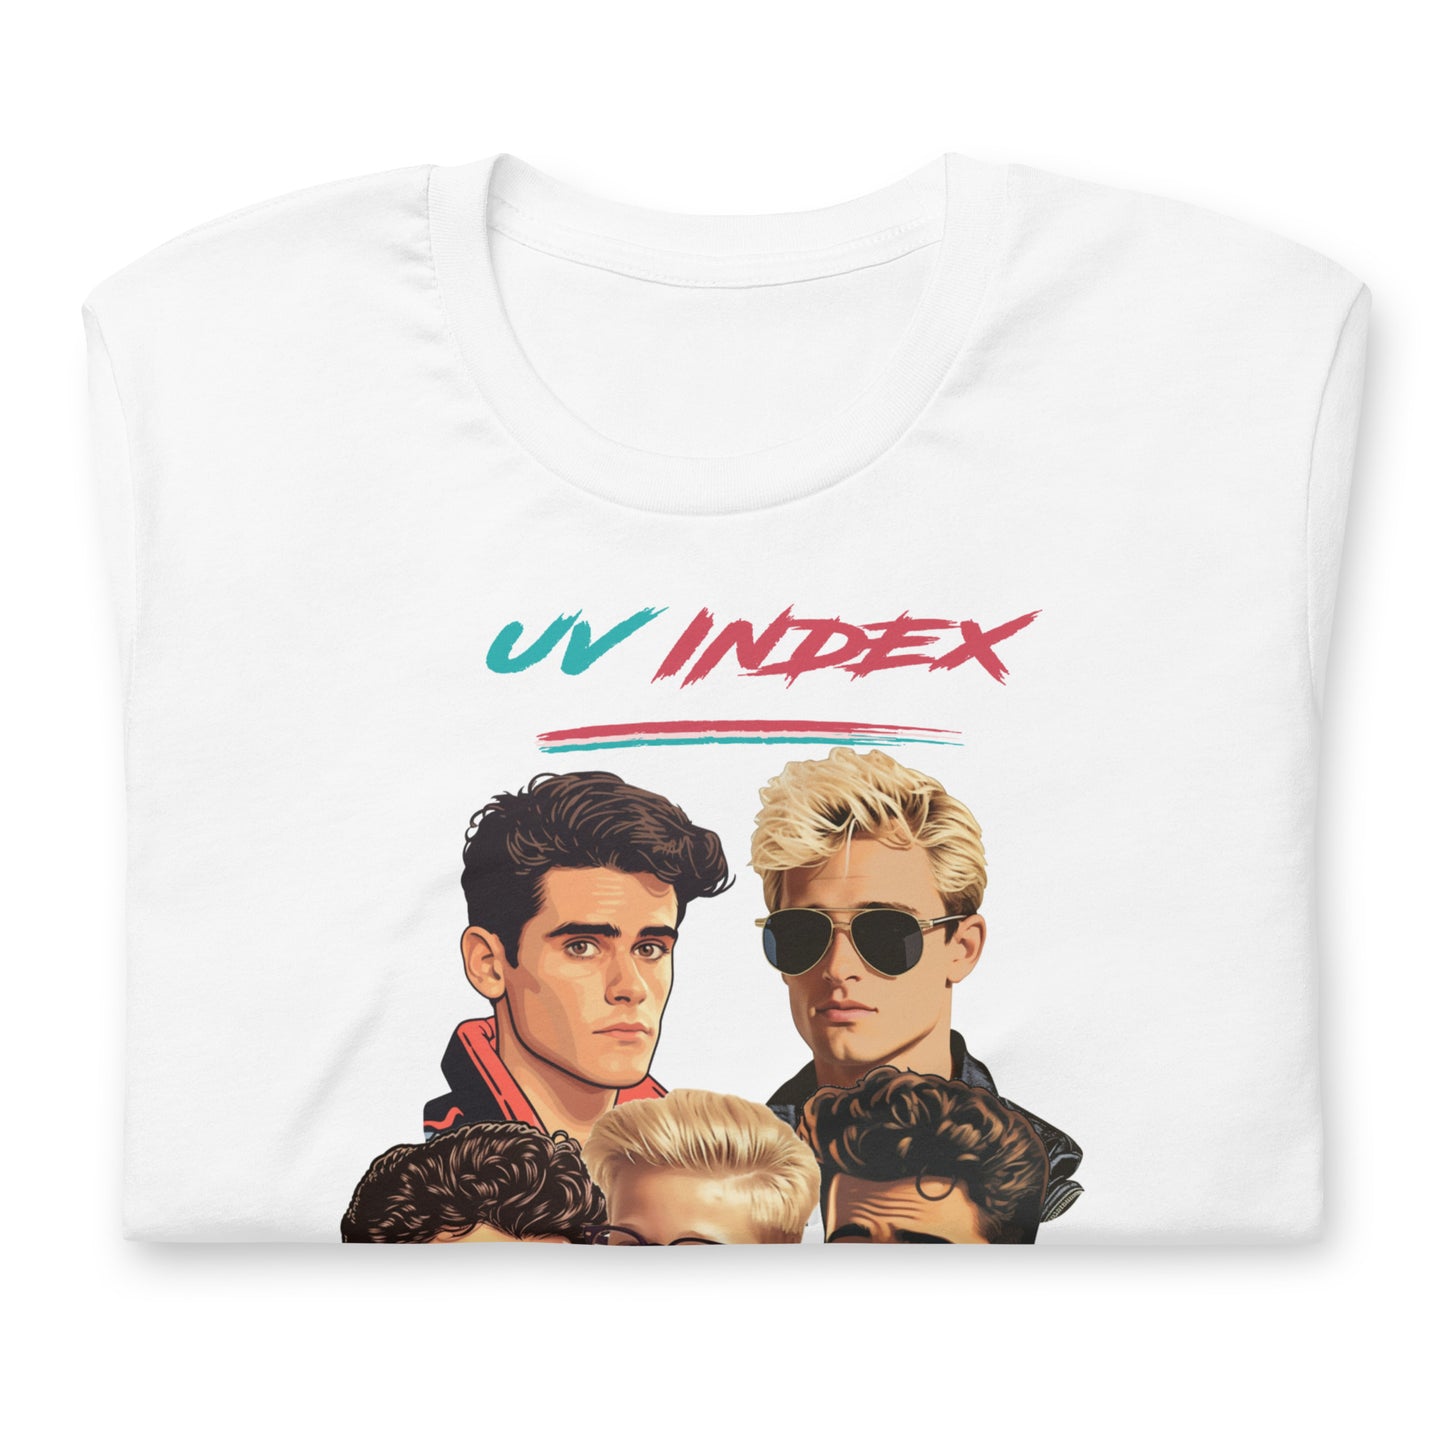 UV Index 91' Summer Wave Tour Shirt